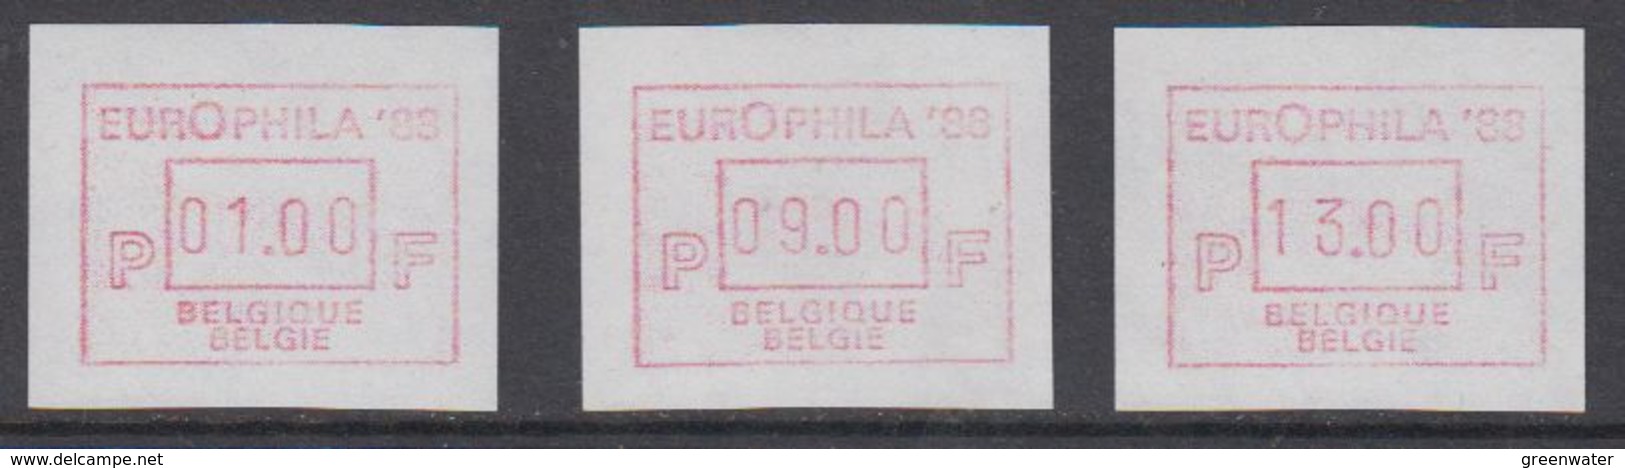 Belgie 1988 Frama / Europhila '88 3w ** Mnh (44303) - Europese Gedachte